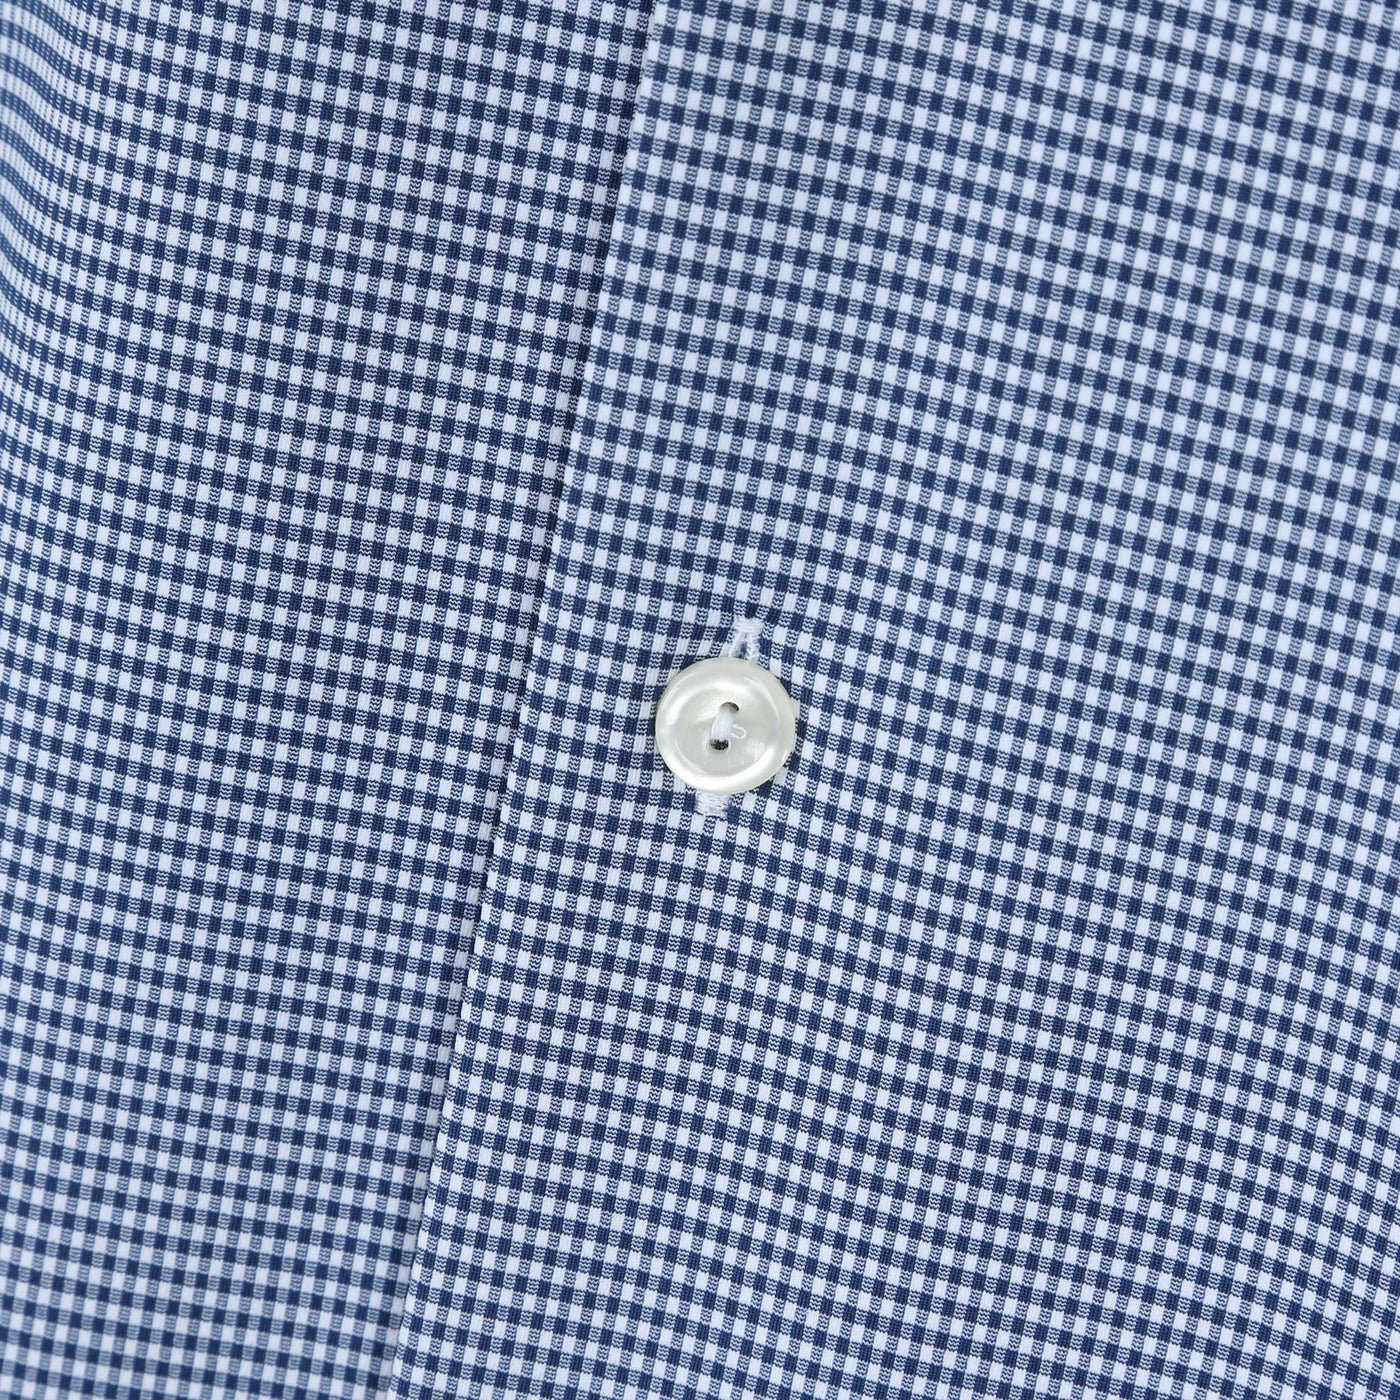 Eton 4 Way Stretch Gingham Check Shirt in Navy Button